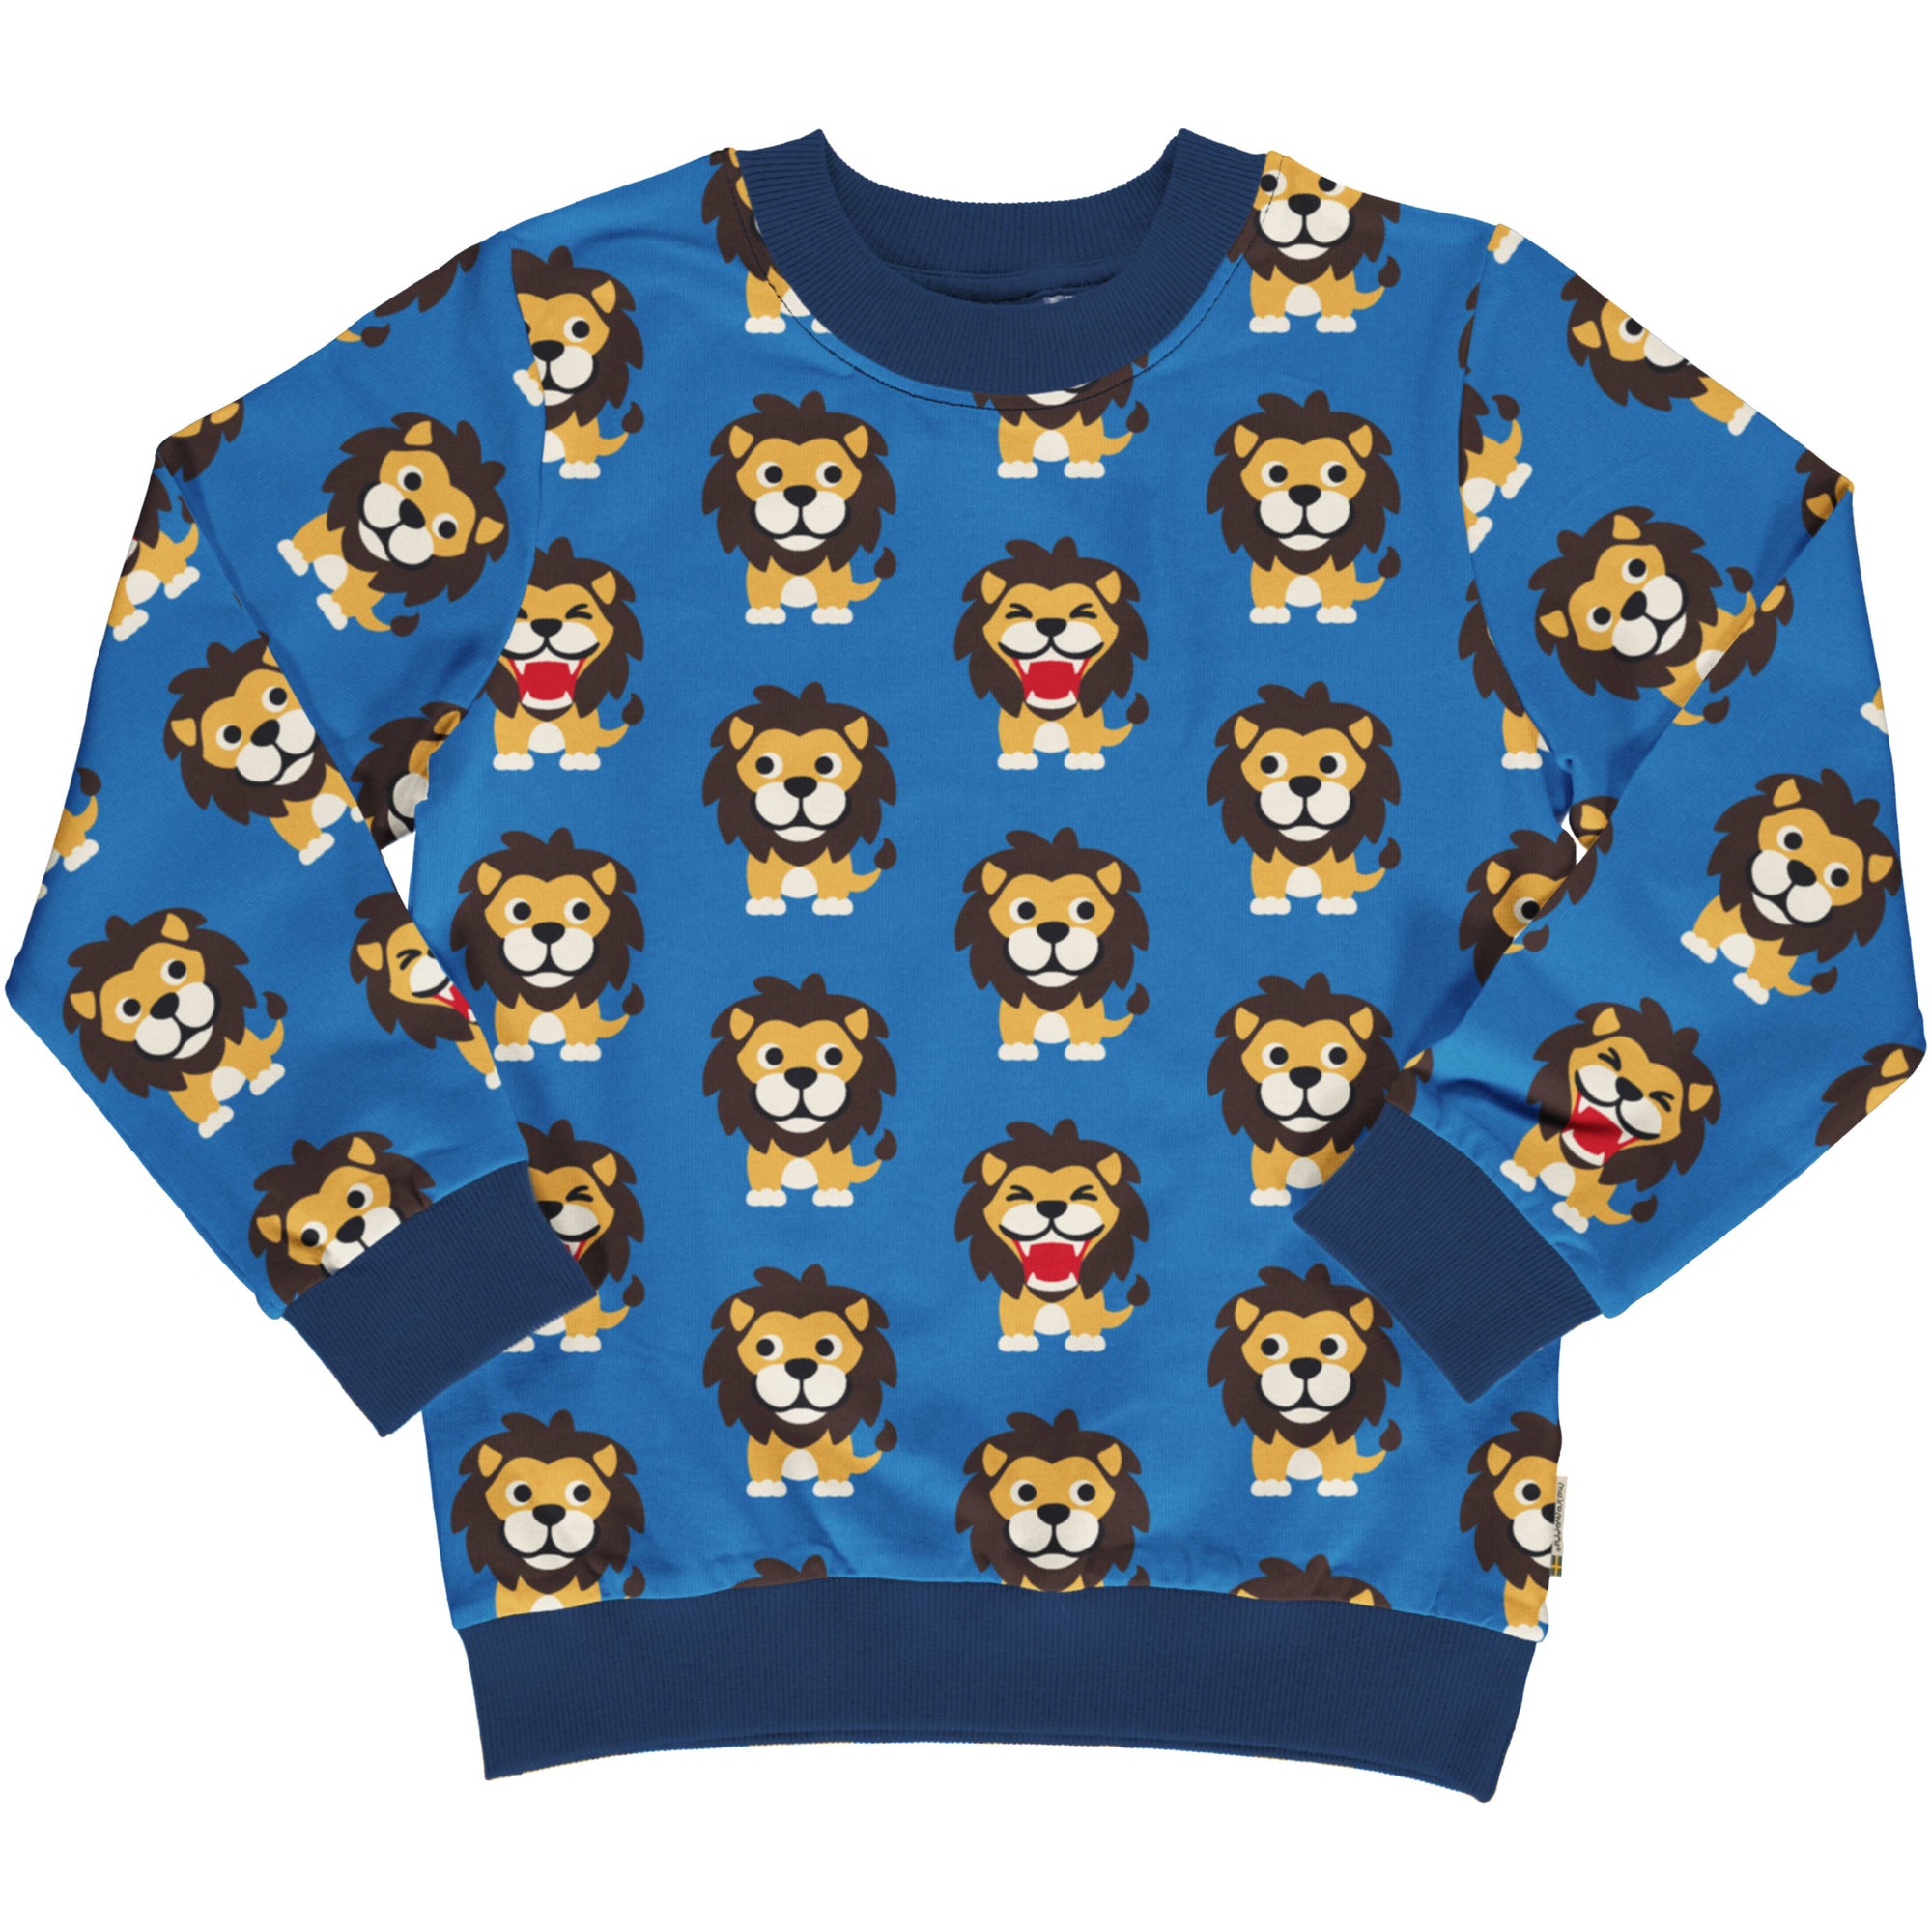 Maxomorra Lion Sweatshirt Dxa2309-Sxa2320 Clothing 3-4YRS / Blue,5-6YRS / Blue,7-8YRS / Blue,9-10YRS / Blue